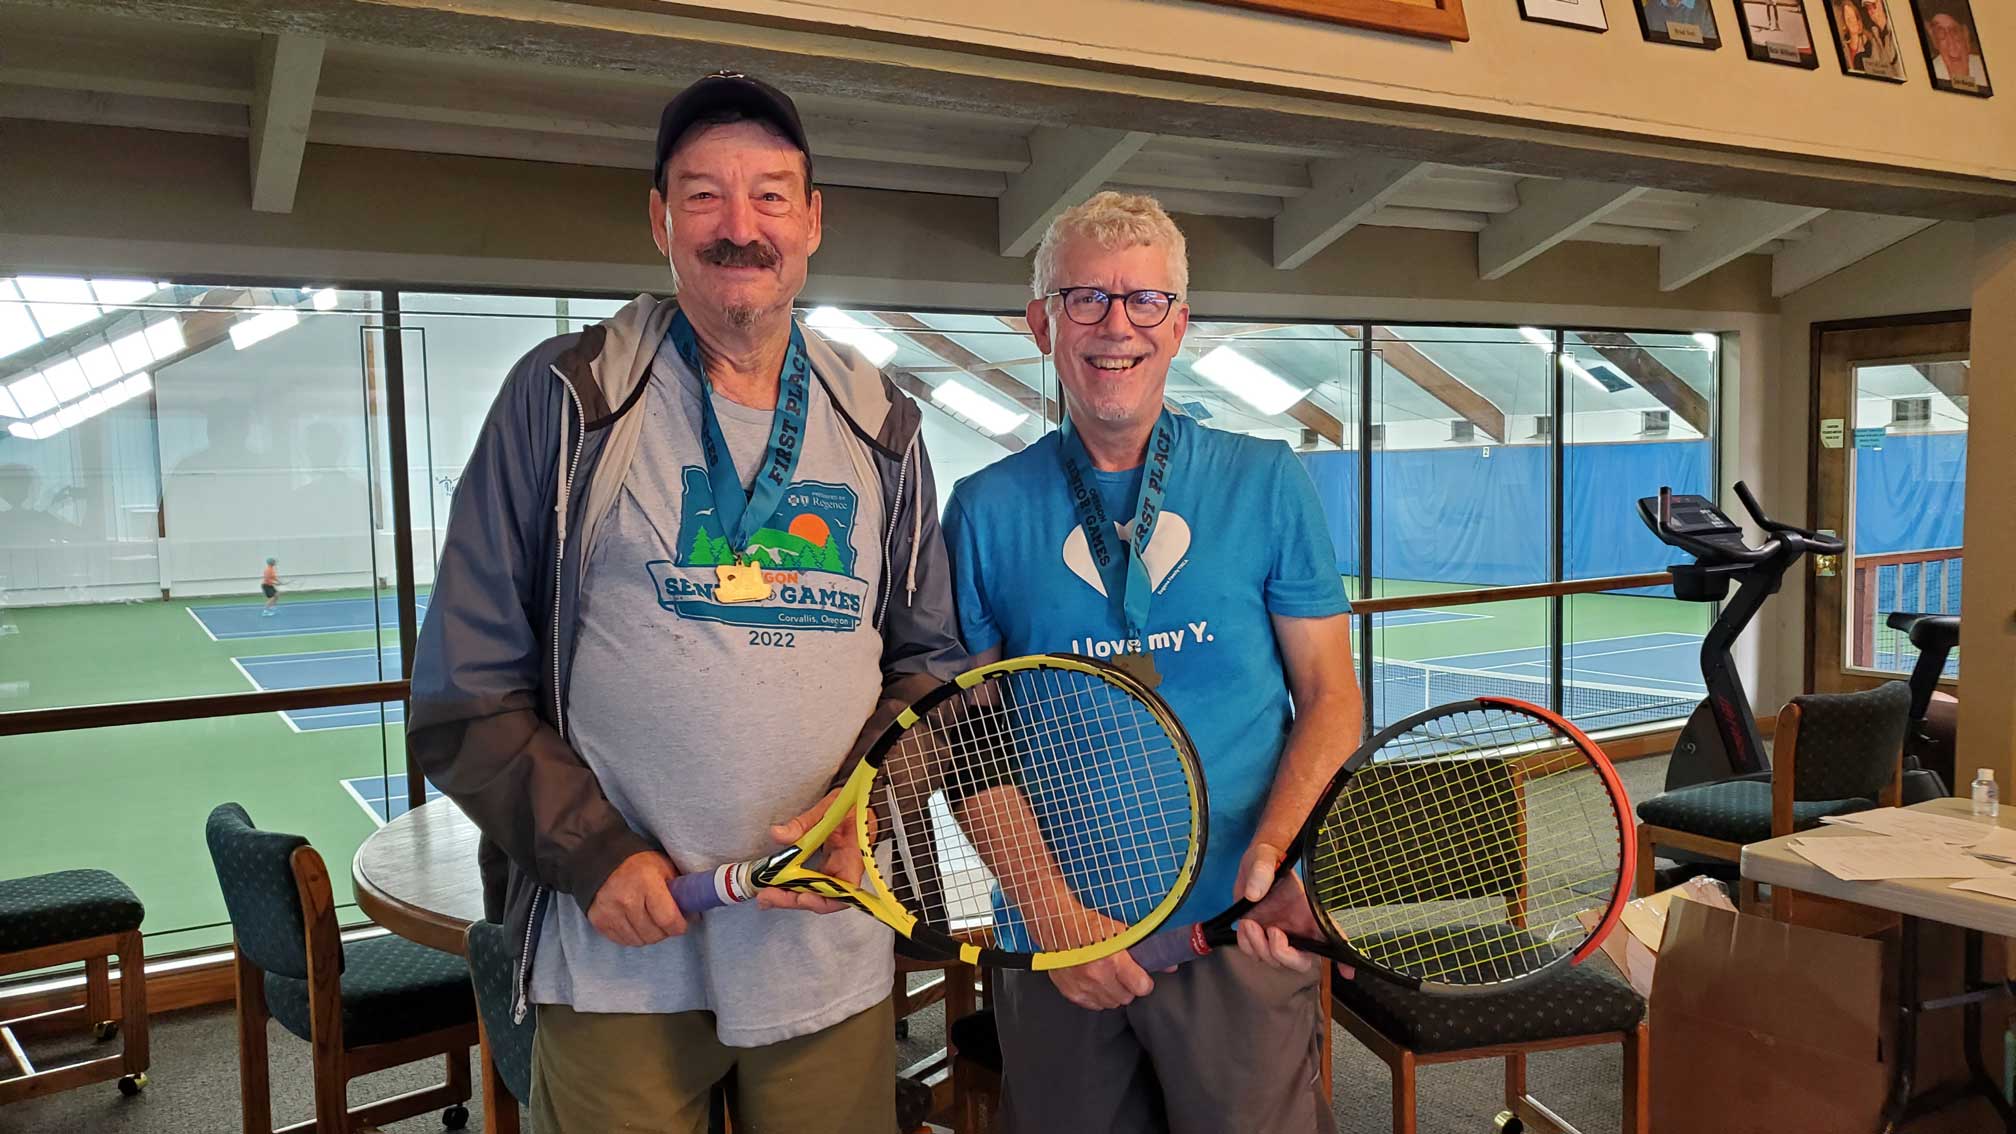 Chris Buchanan and Tom Harburg from Oregon Senior Games